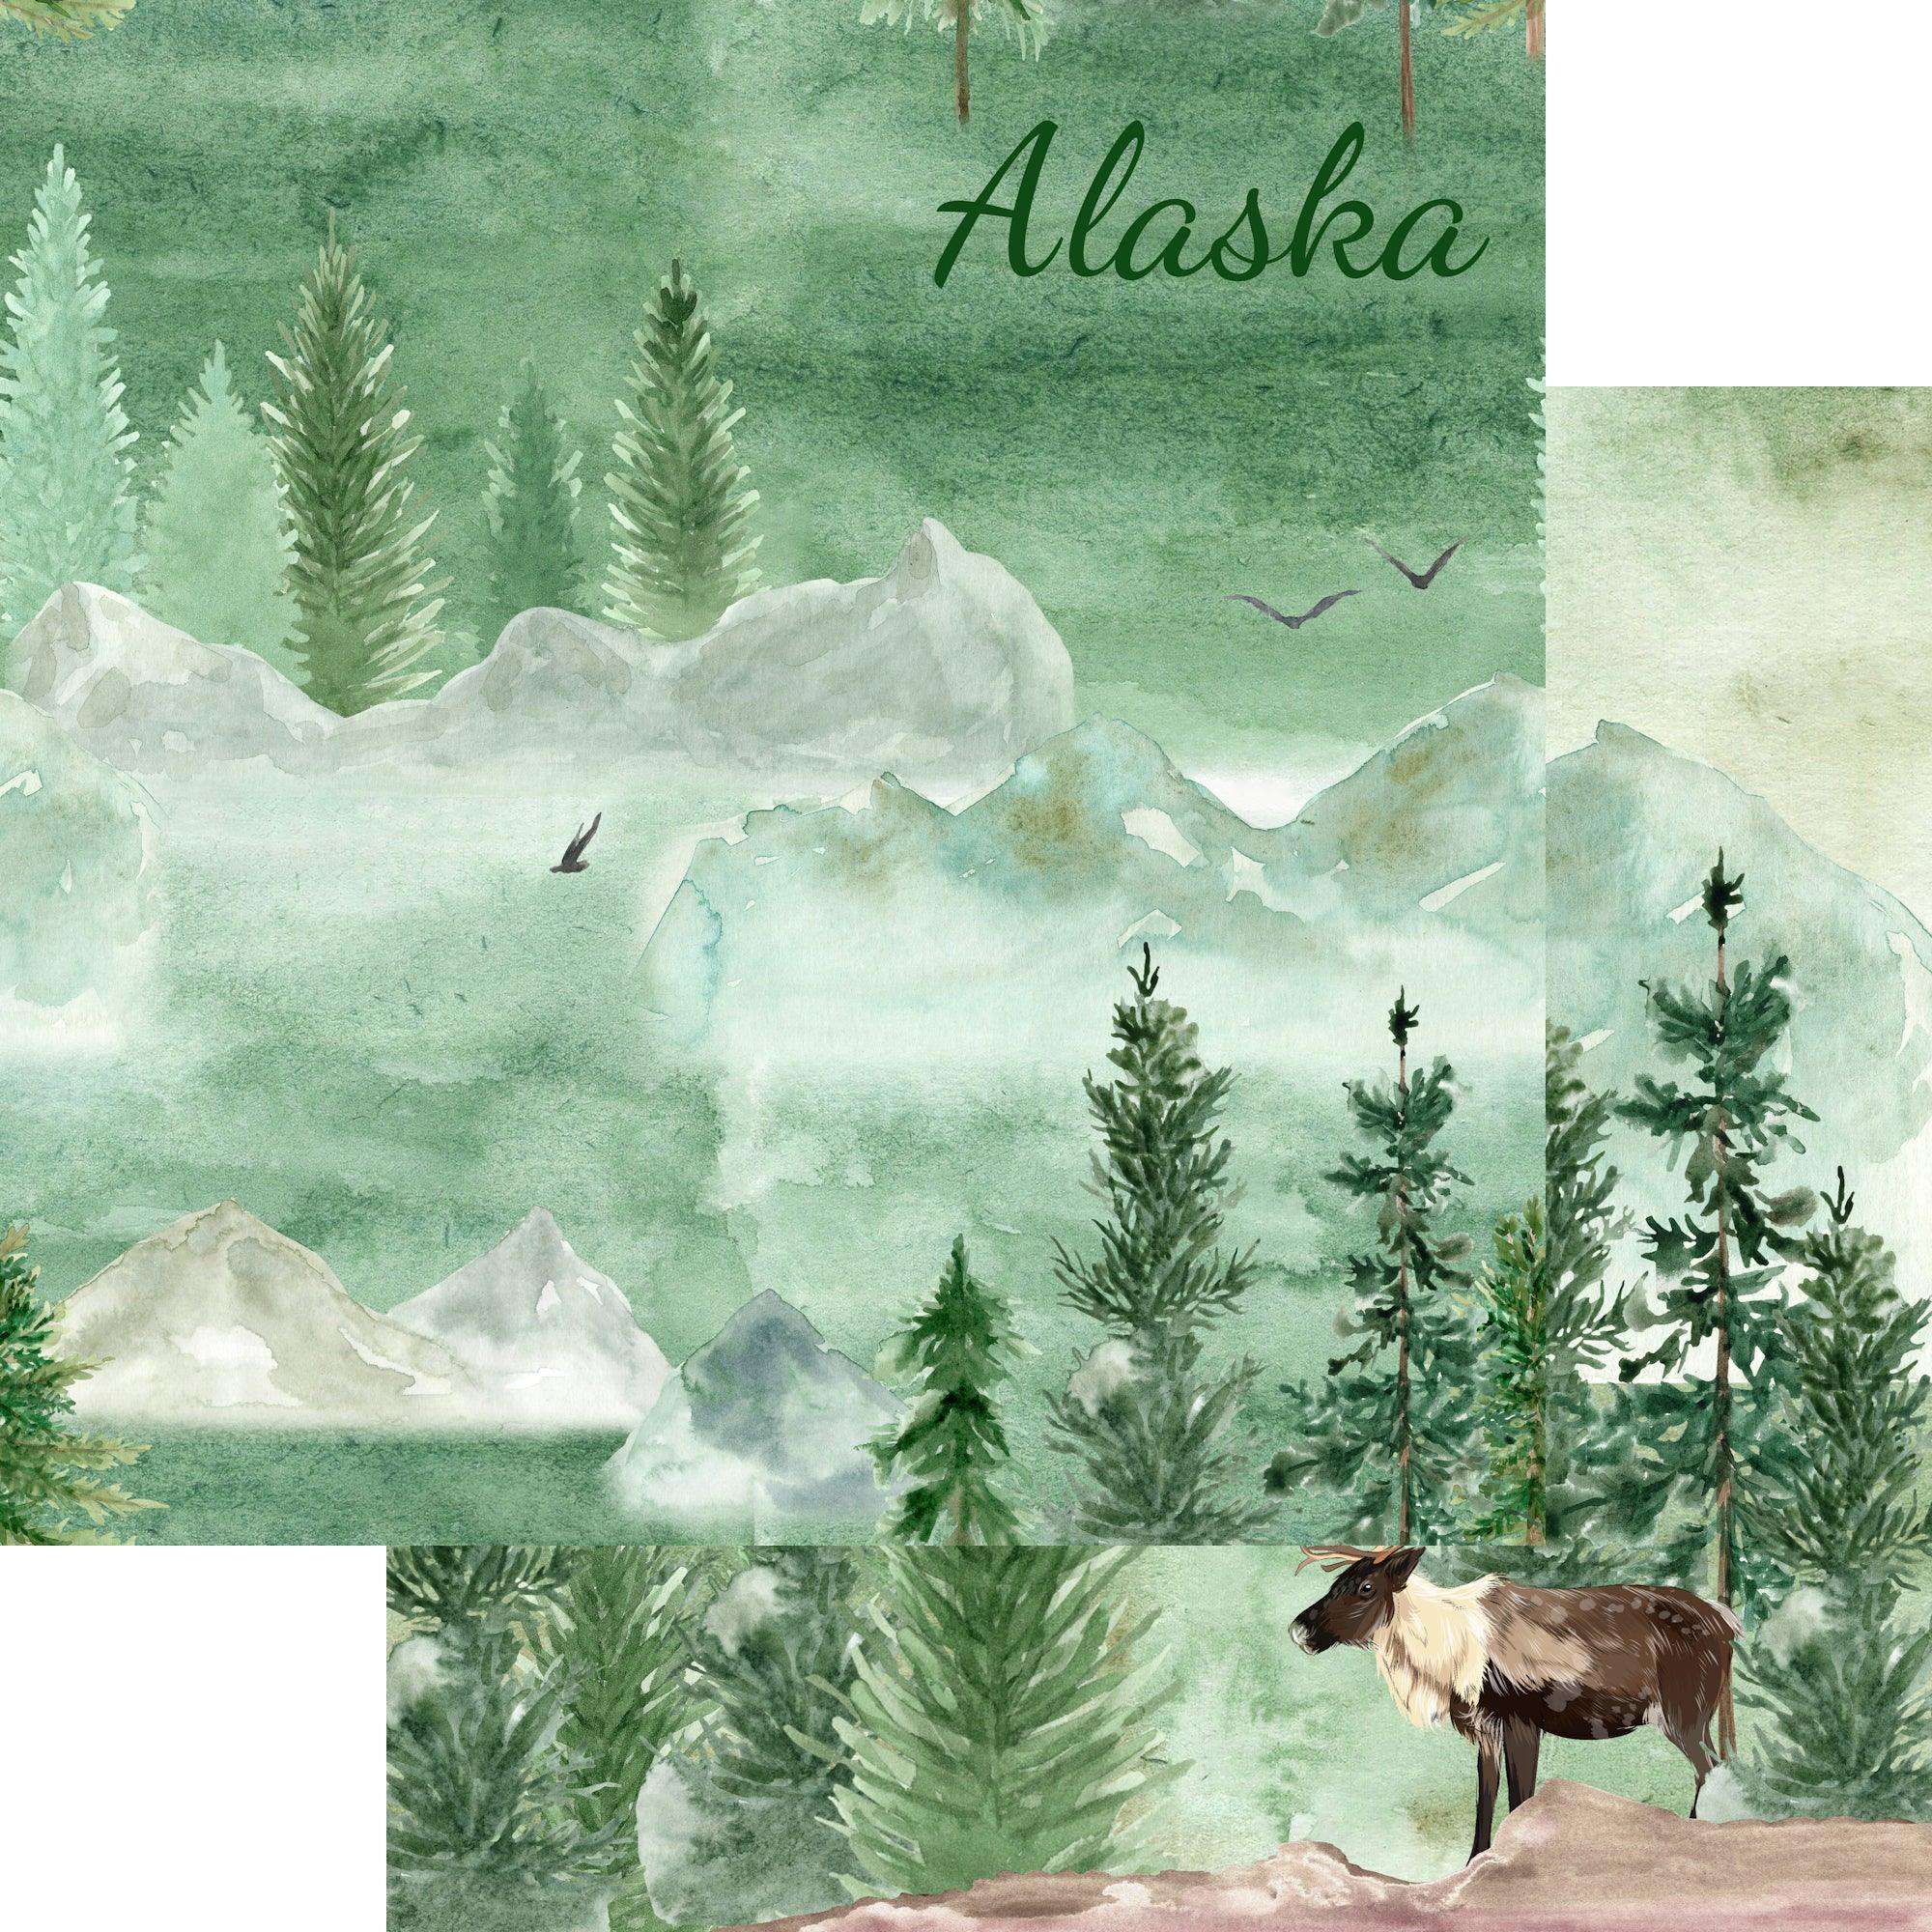 Alaskan Adventure Collection Alaska 12 x 12 Double-Sided Scrapbook Paper by SSC Designs - Scrapbook Supply Companies